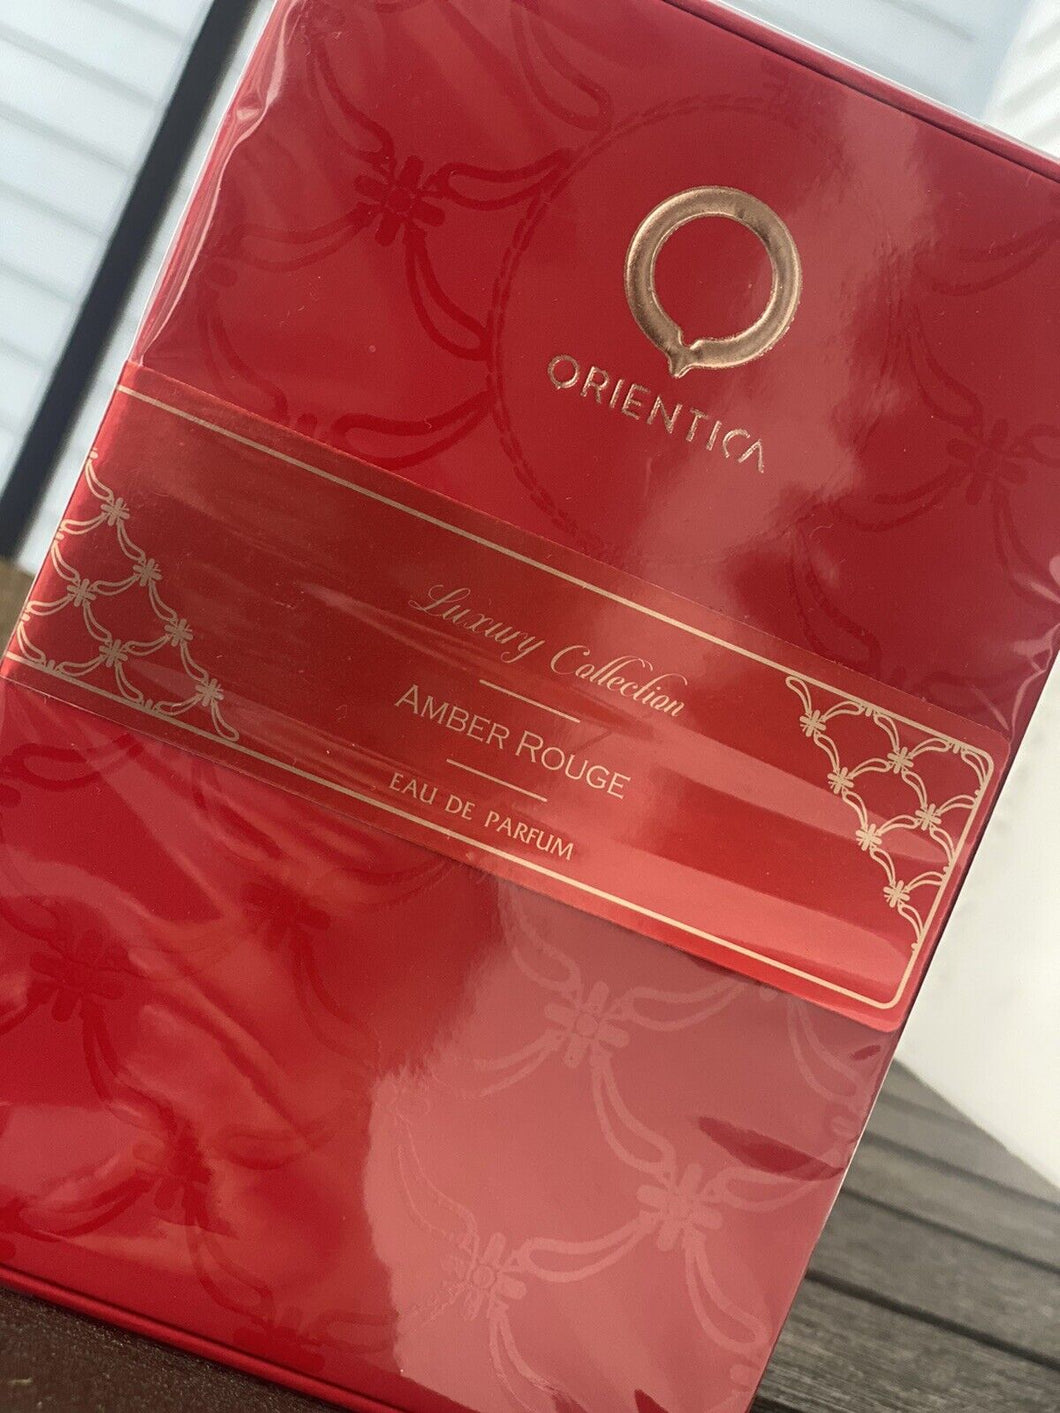 Orientica Amber Rouge by Orientica 2.7 oz 80ml EDP Perfume Unisex SEALED BOX